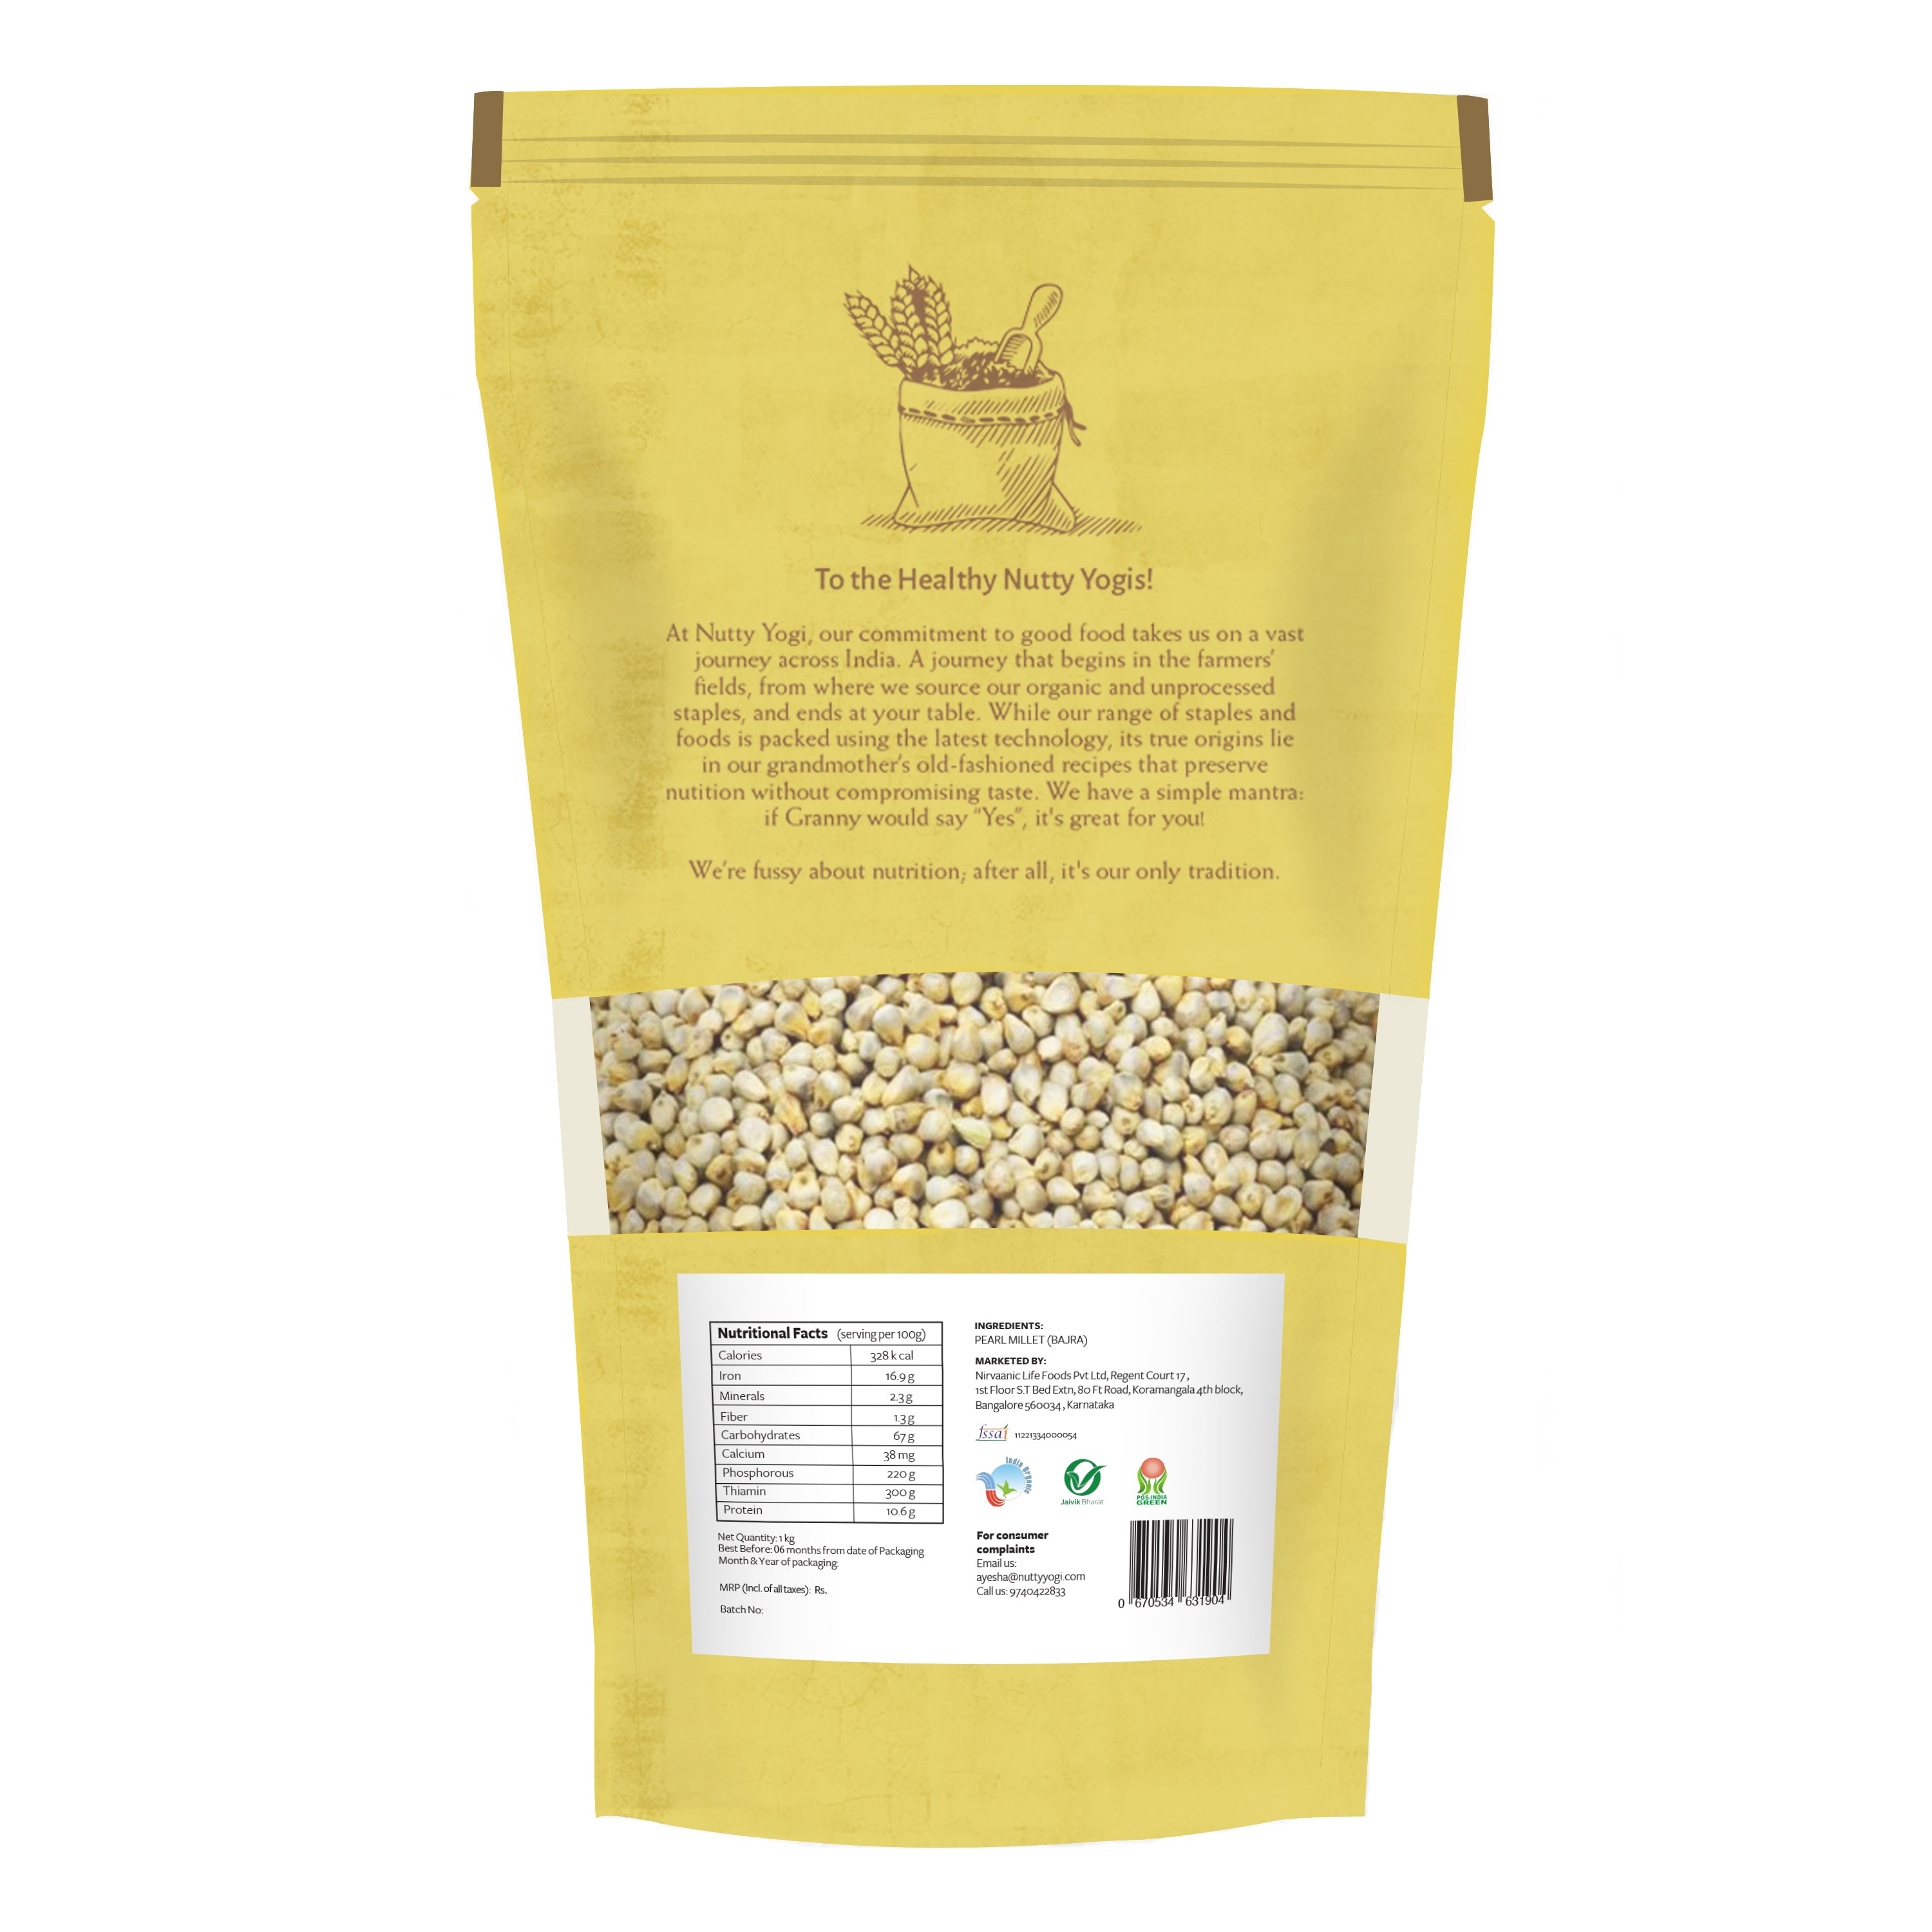 Nutty Yogi Organic Pearl Millet / Bajra